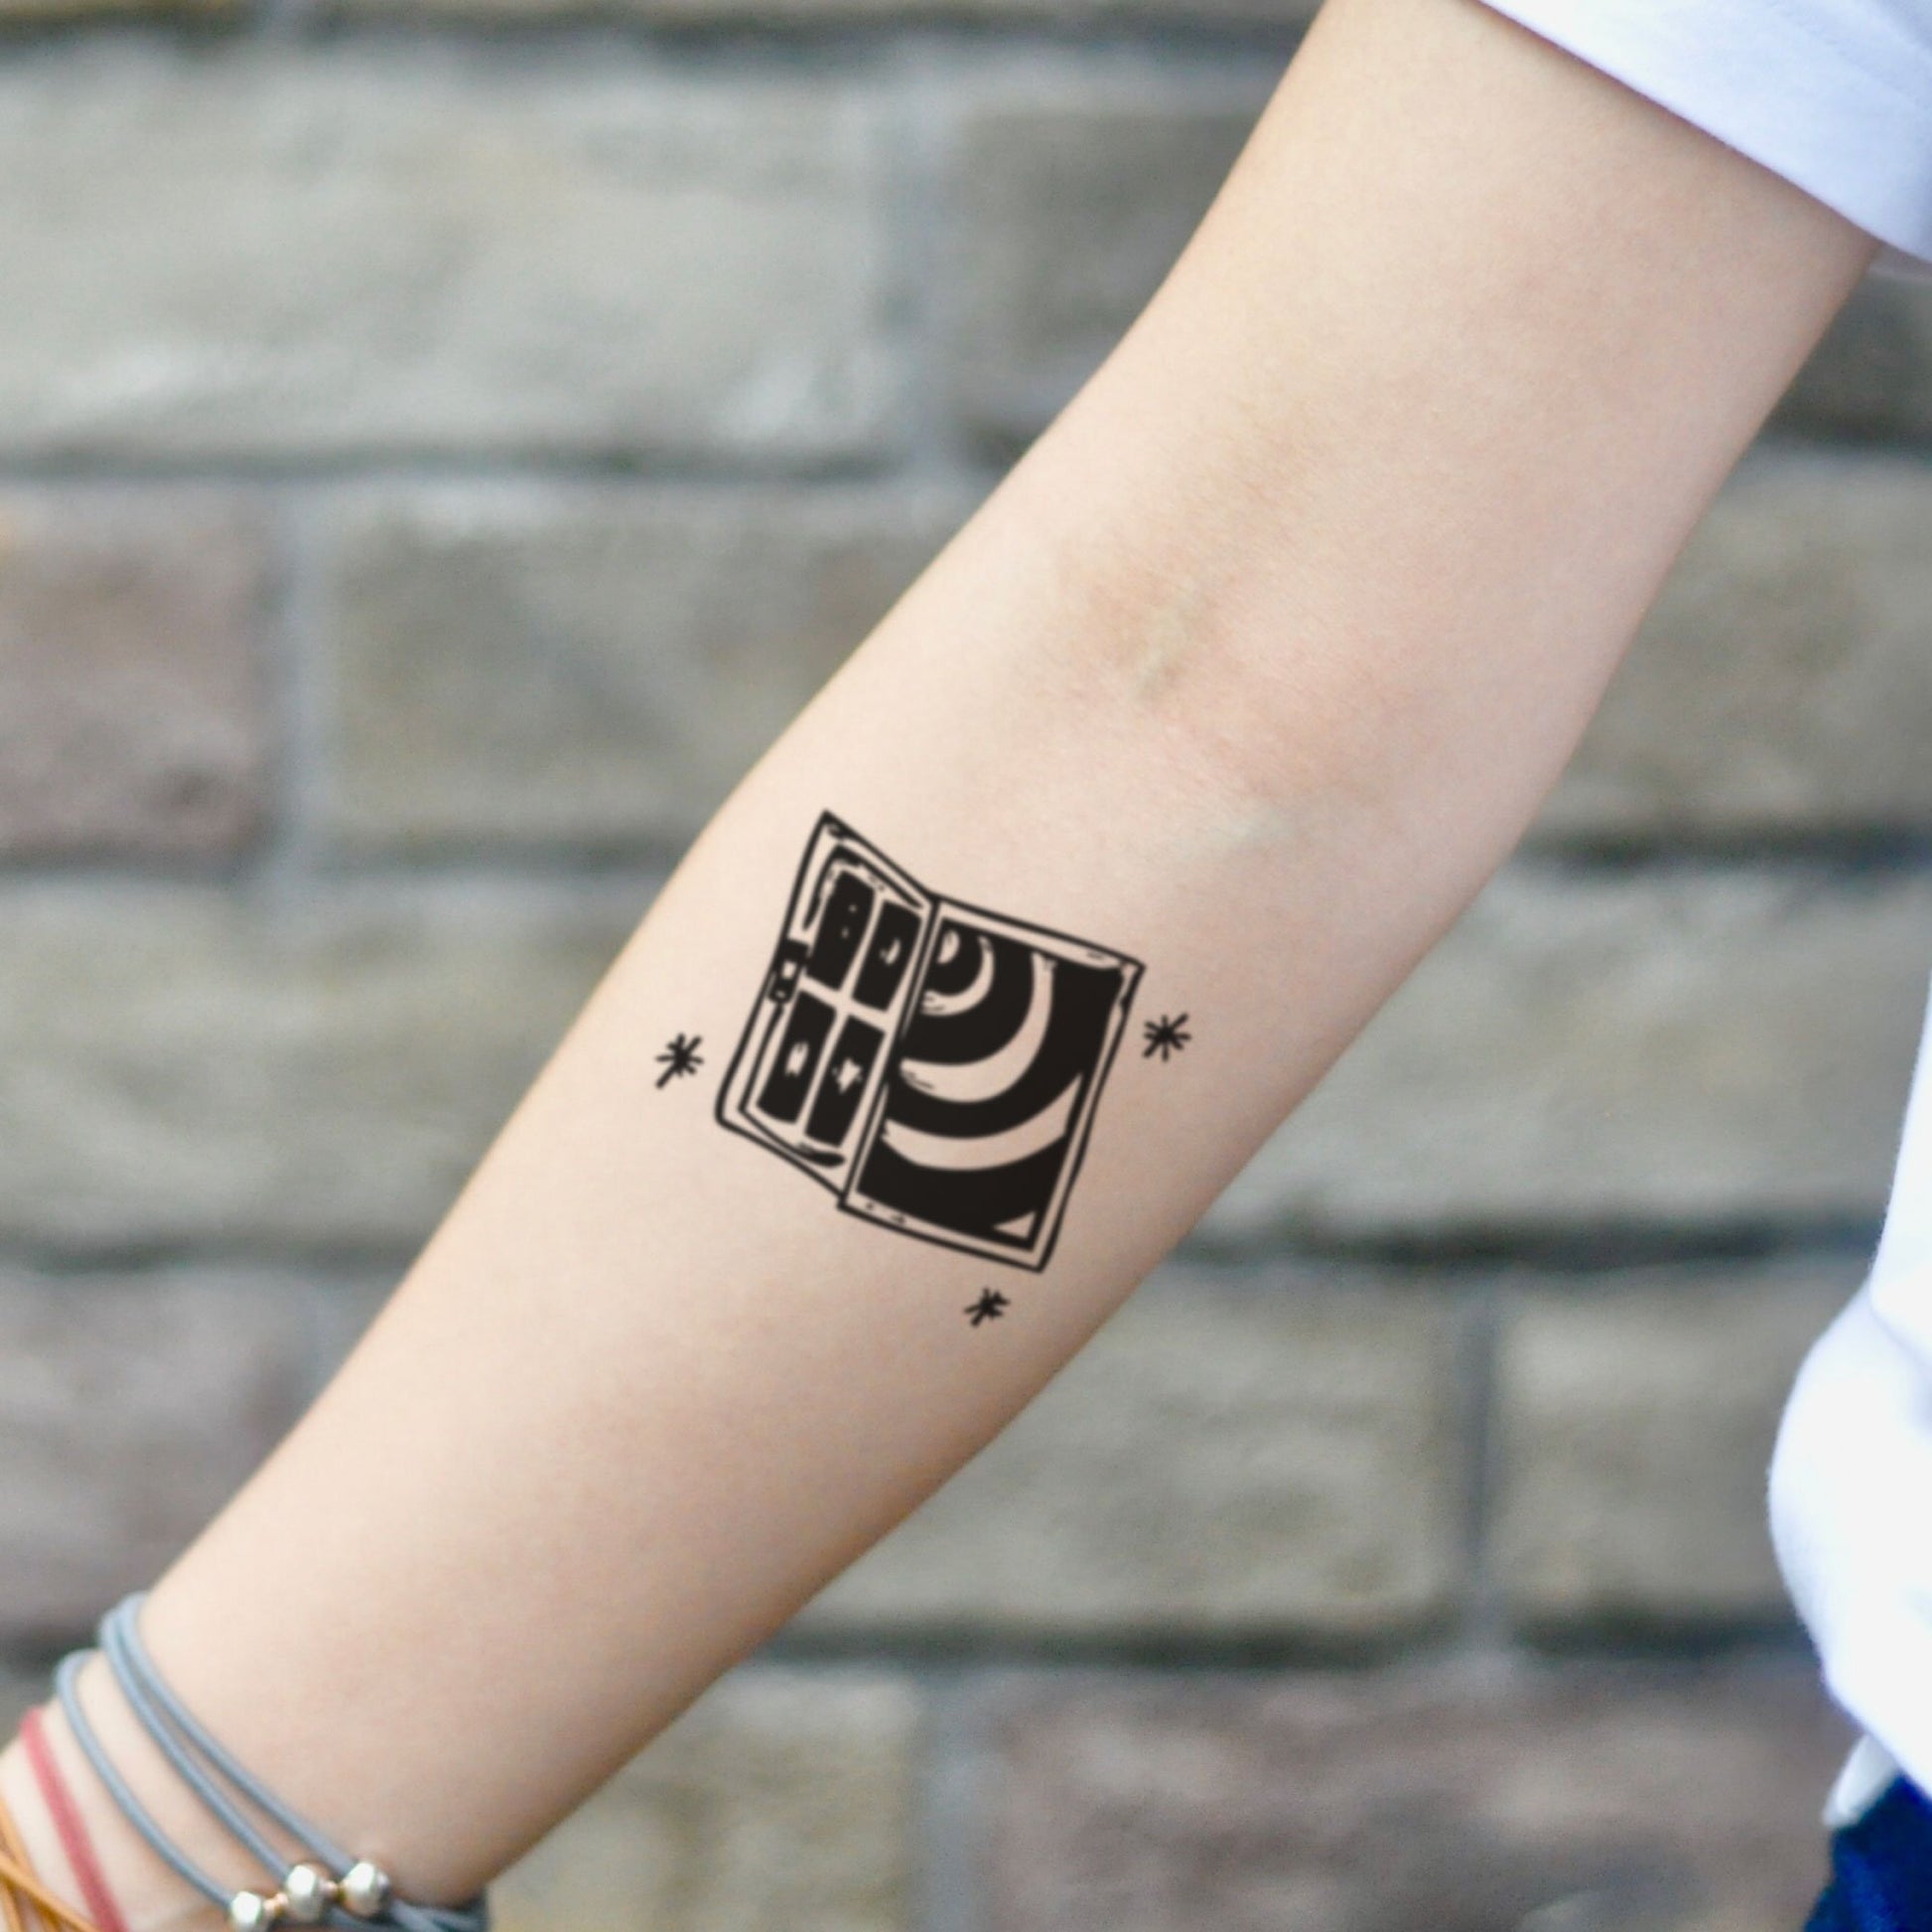 fake small twilight zone abstract trippy spiral door illustrative temporary tattoo sticker design idea on inner arm